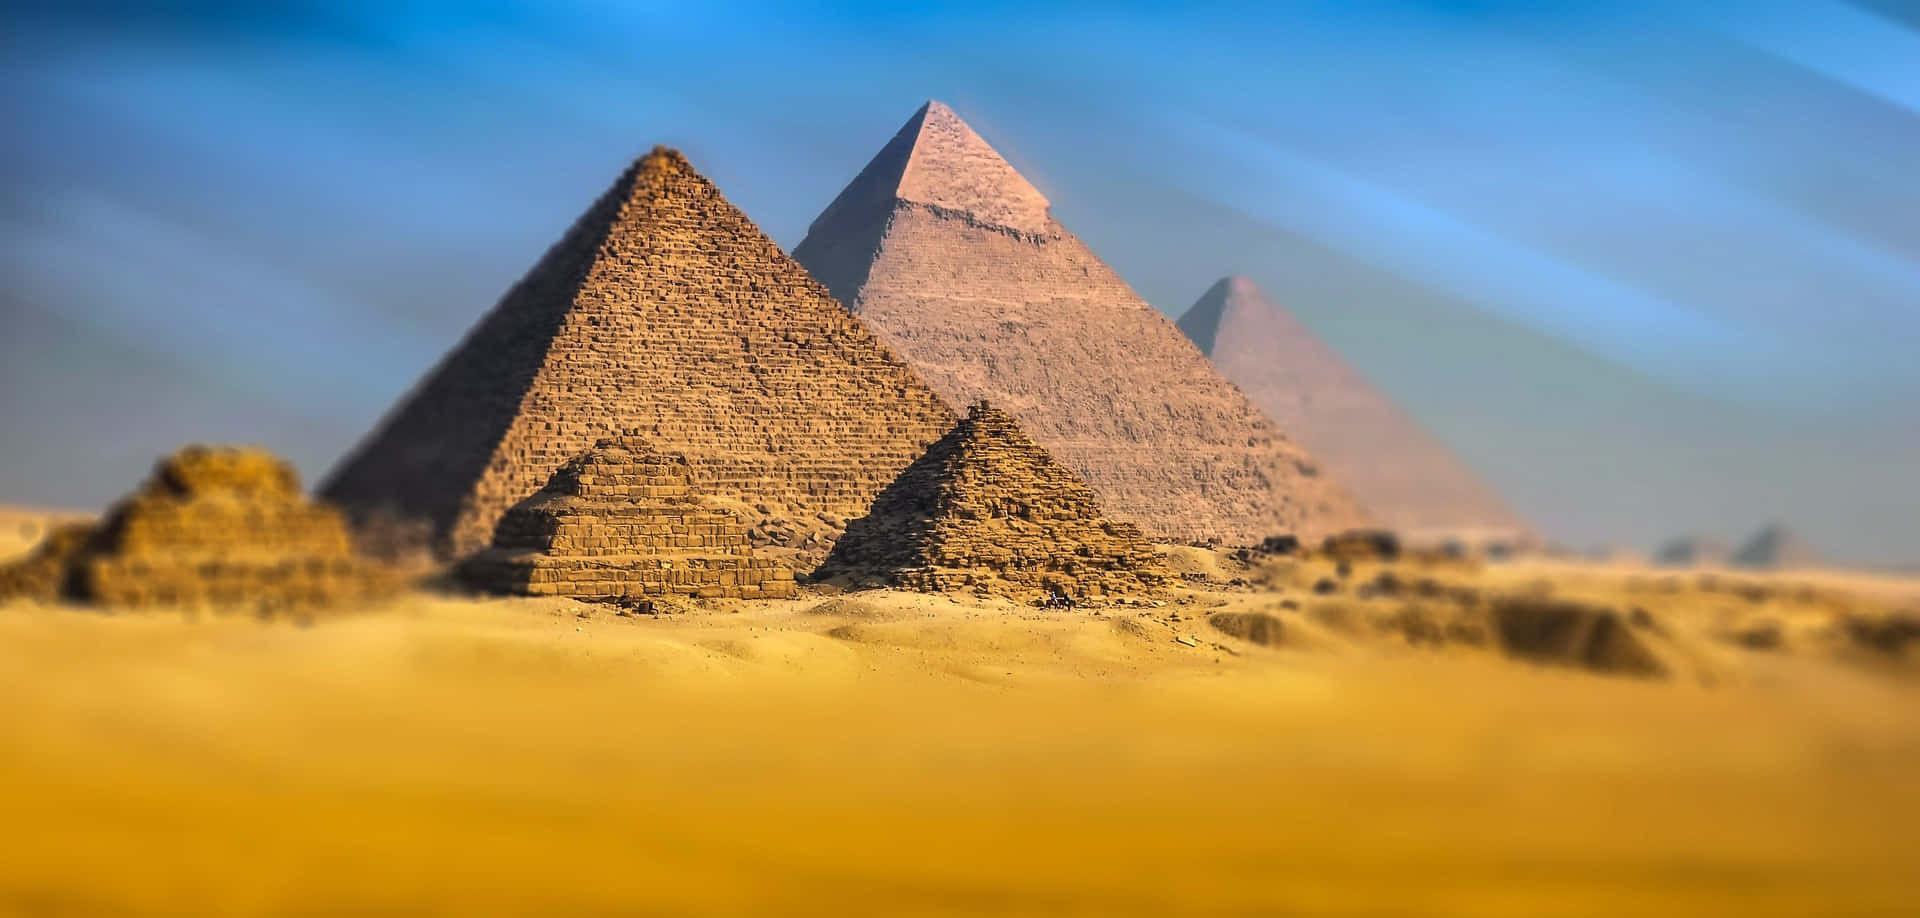 Immagini Delle Piramidi Egiziane